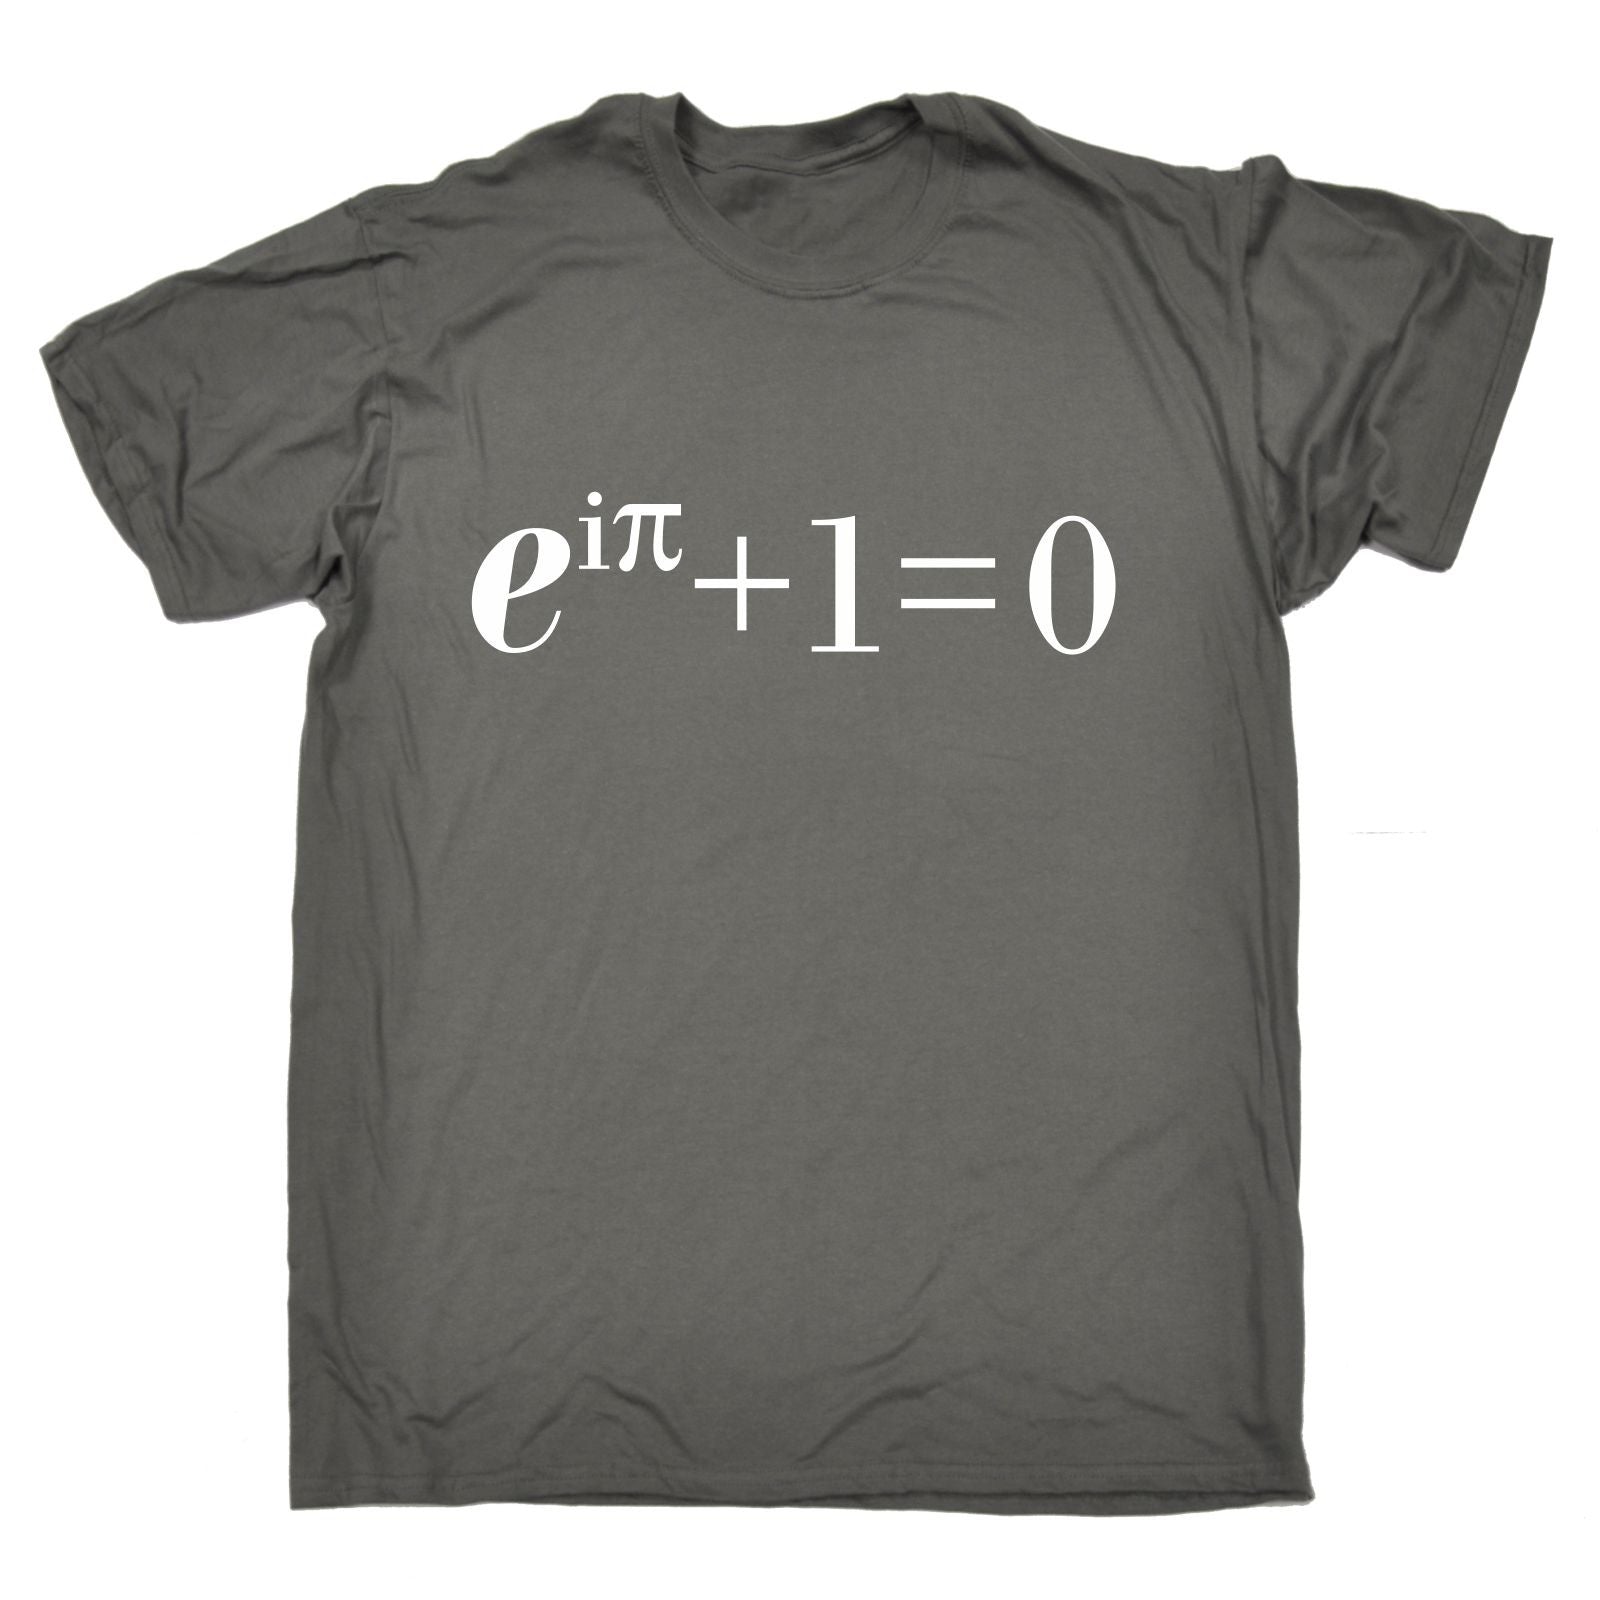 EULER EQUATION T-SHIRT maths geek nerd science joke funny birthday gift ...